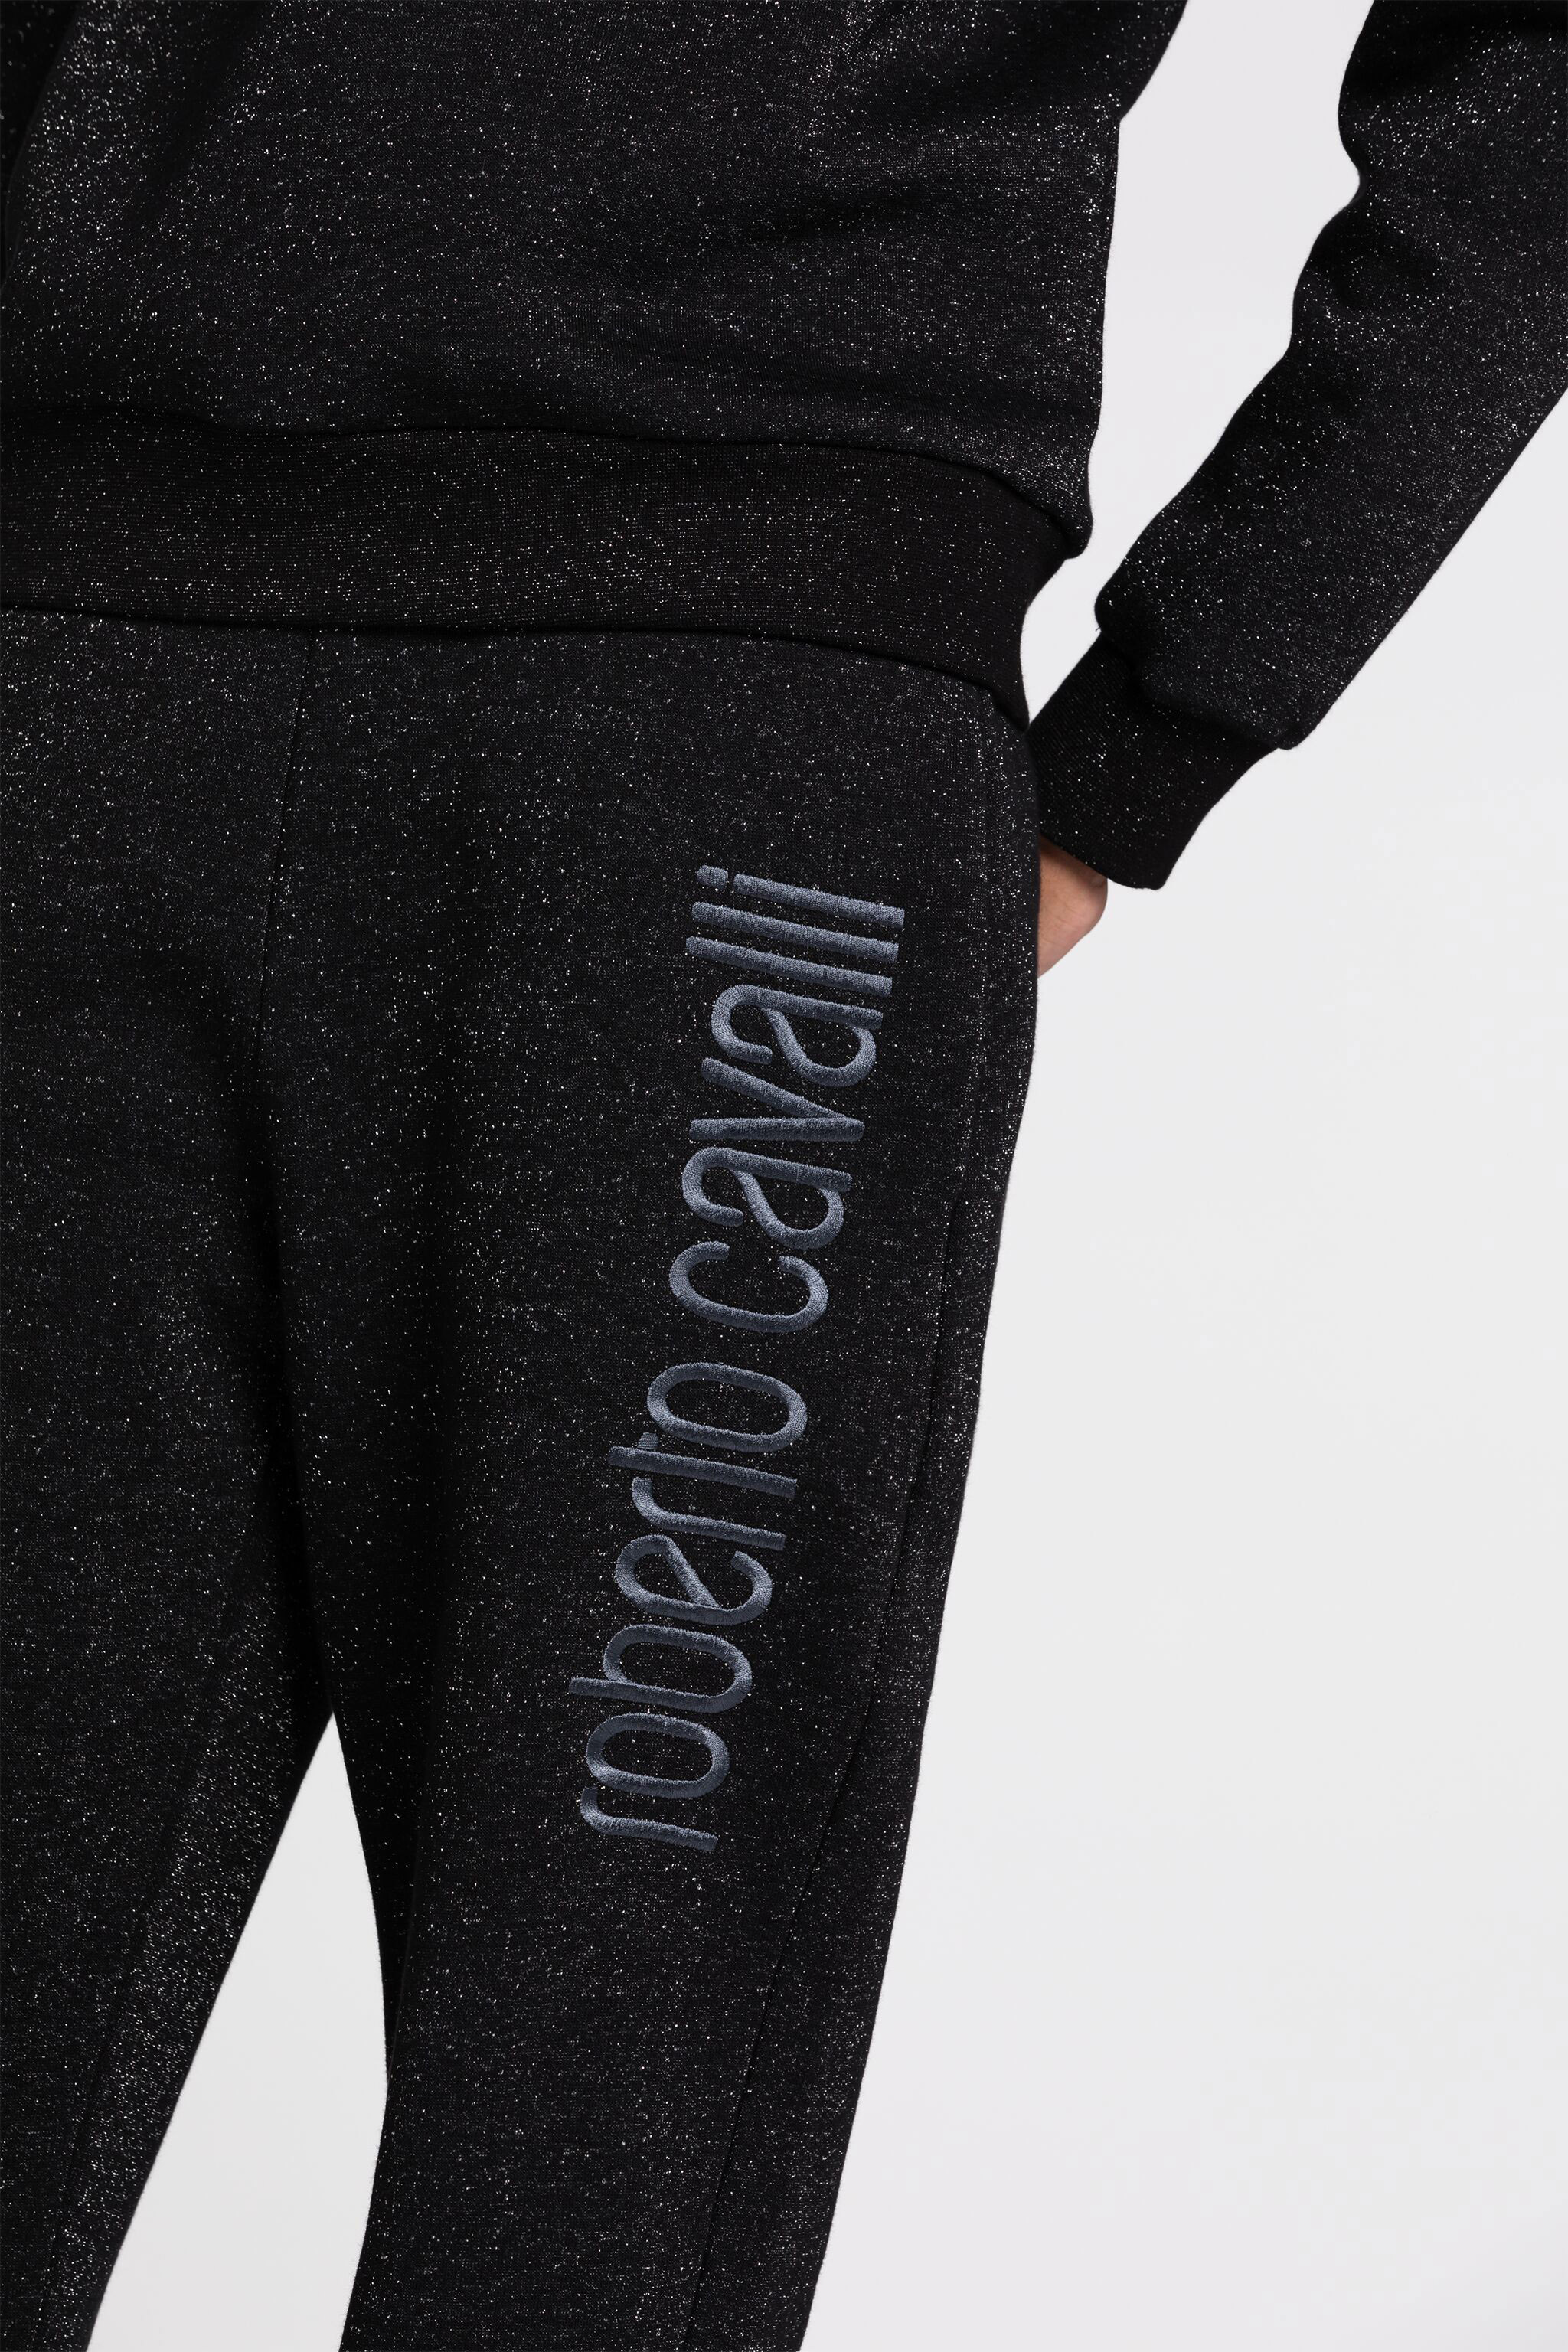 Roberto Cavalli Grey Python-print Cotton Sweatpants in Black for